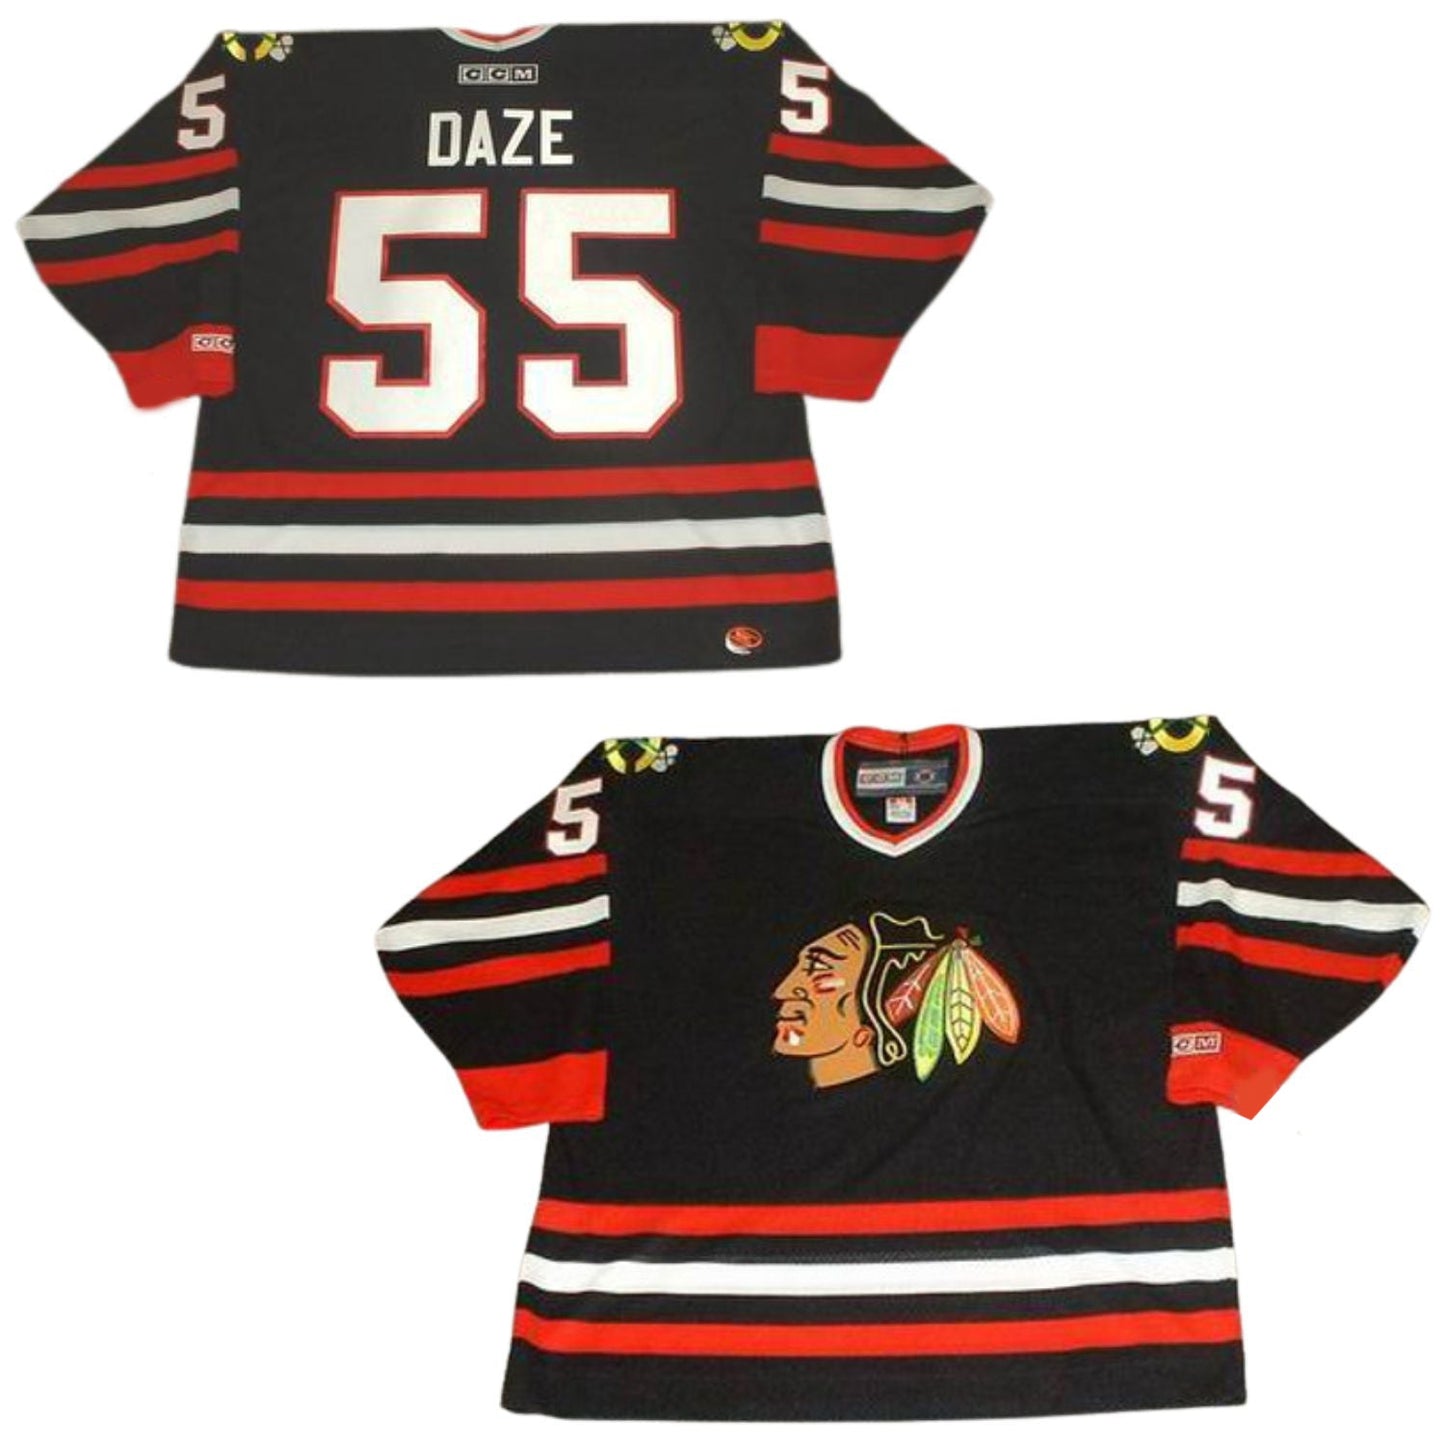 NHL Eric Daze Chicago Blackhawks 55 Jersey